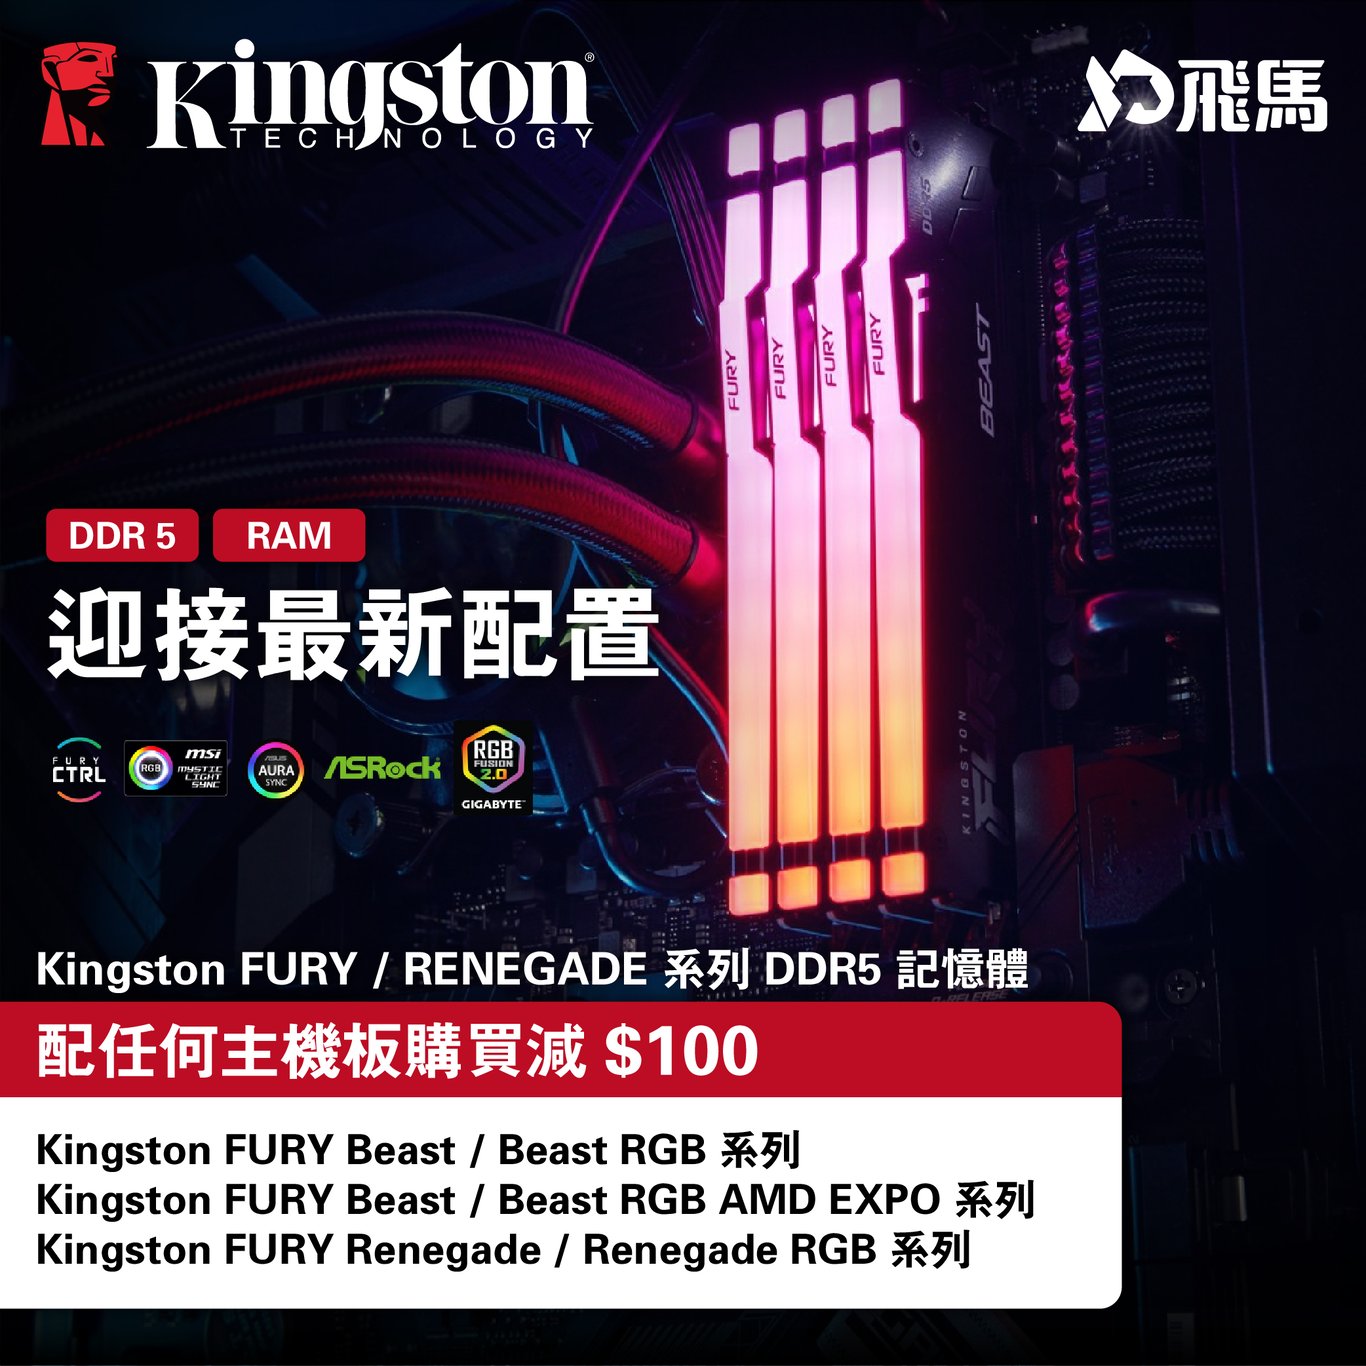 Kingston FURY / RENEGADE 系列 DDR5 記憶體 跟底板購買減$100